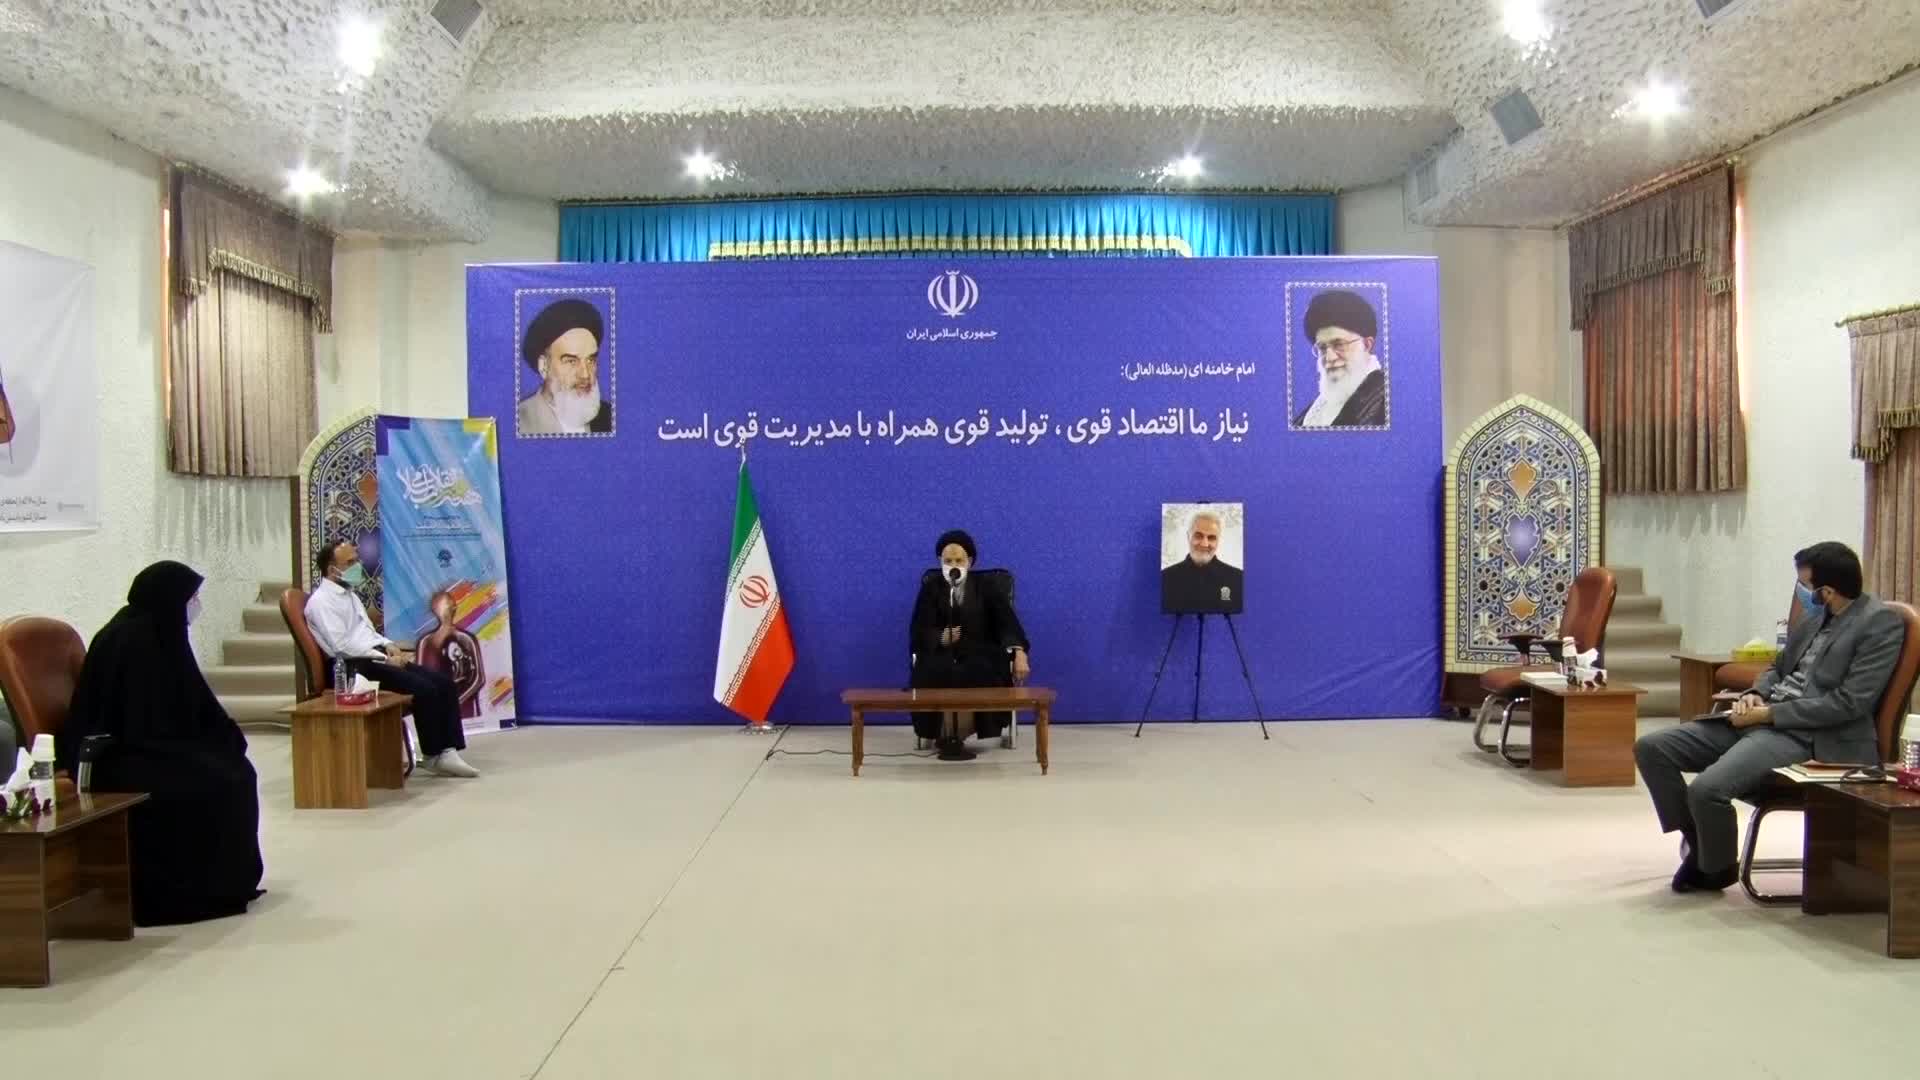 هنر انقلاب اسلامی،هنر انبیا است